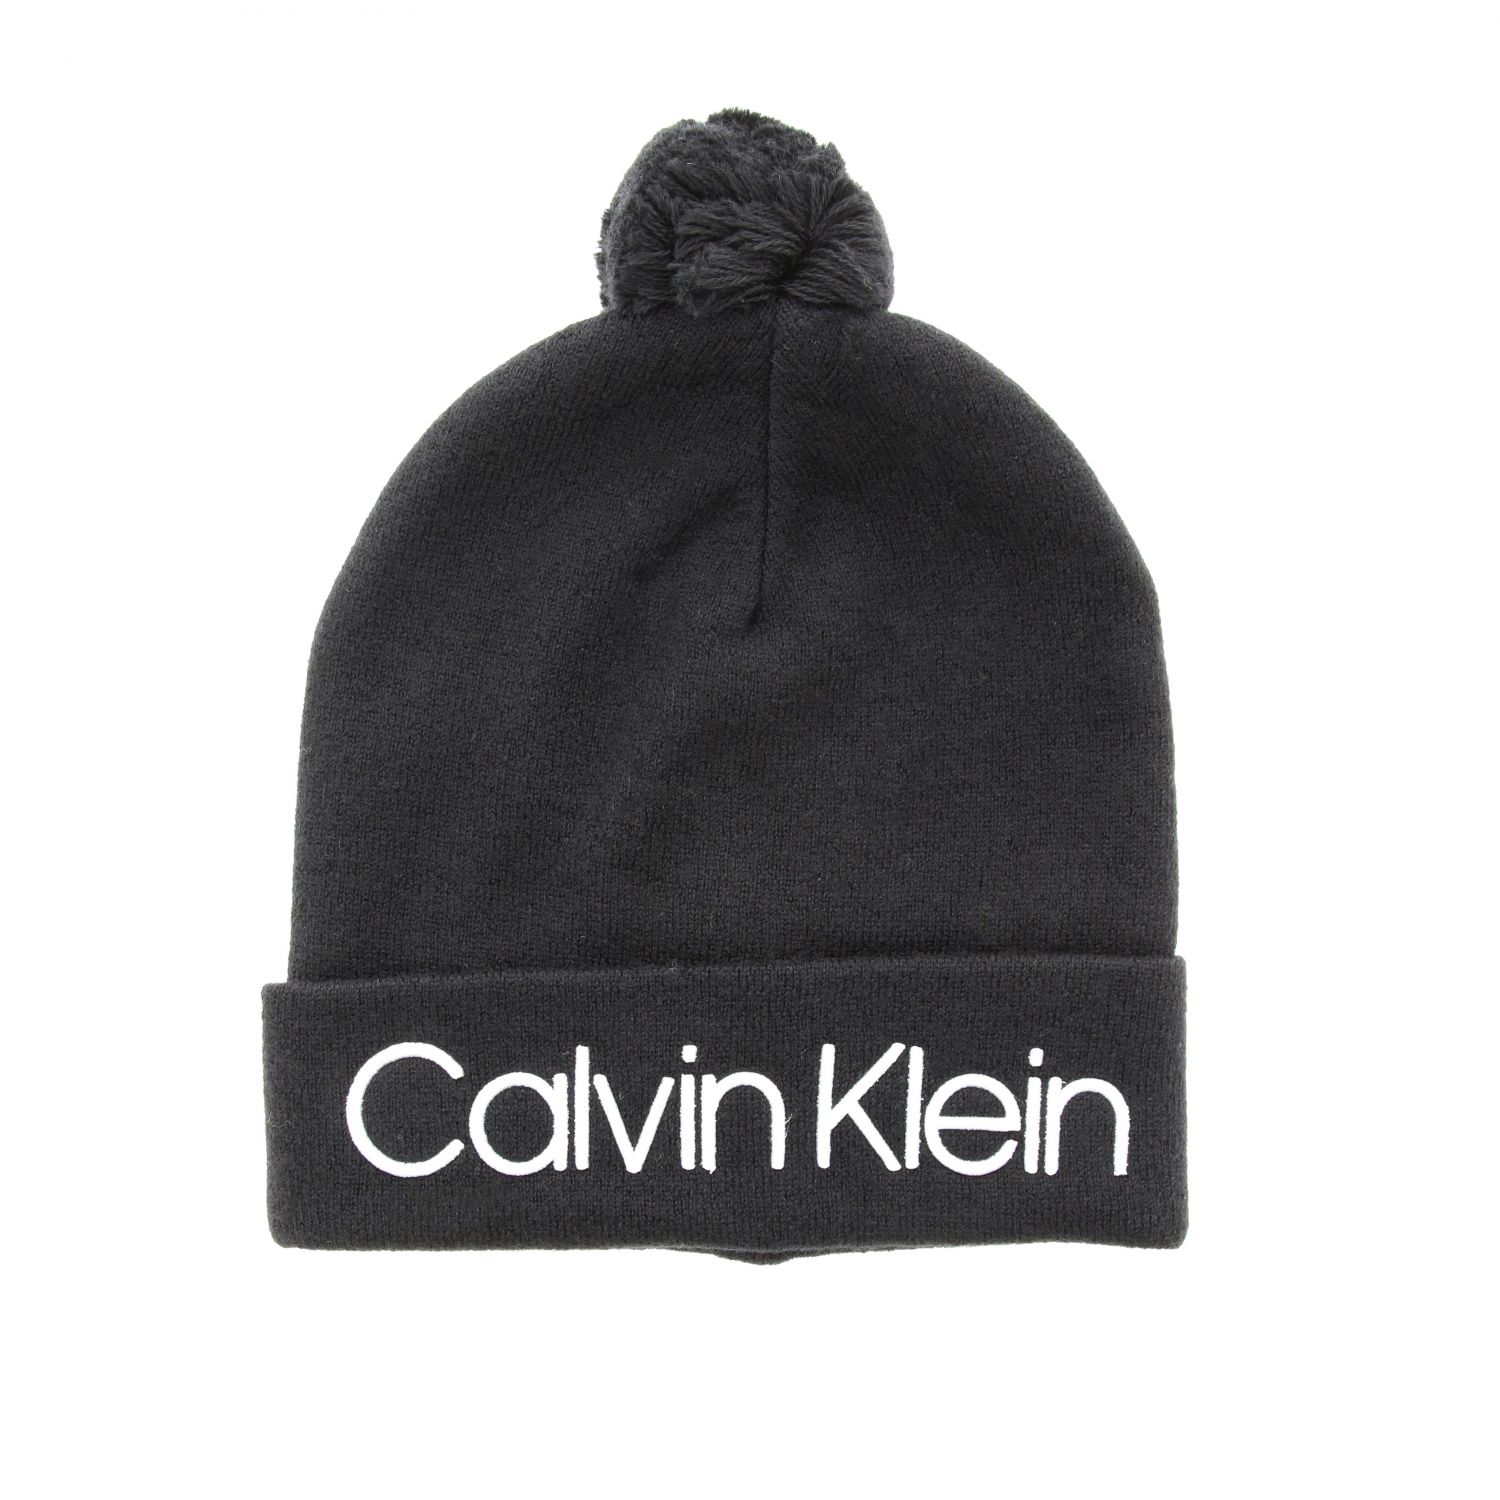 Calvin Klein Outlet: hat for women - Black | Calvin Klein hat K60K605932  online on 